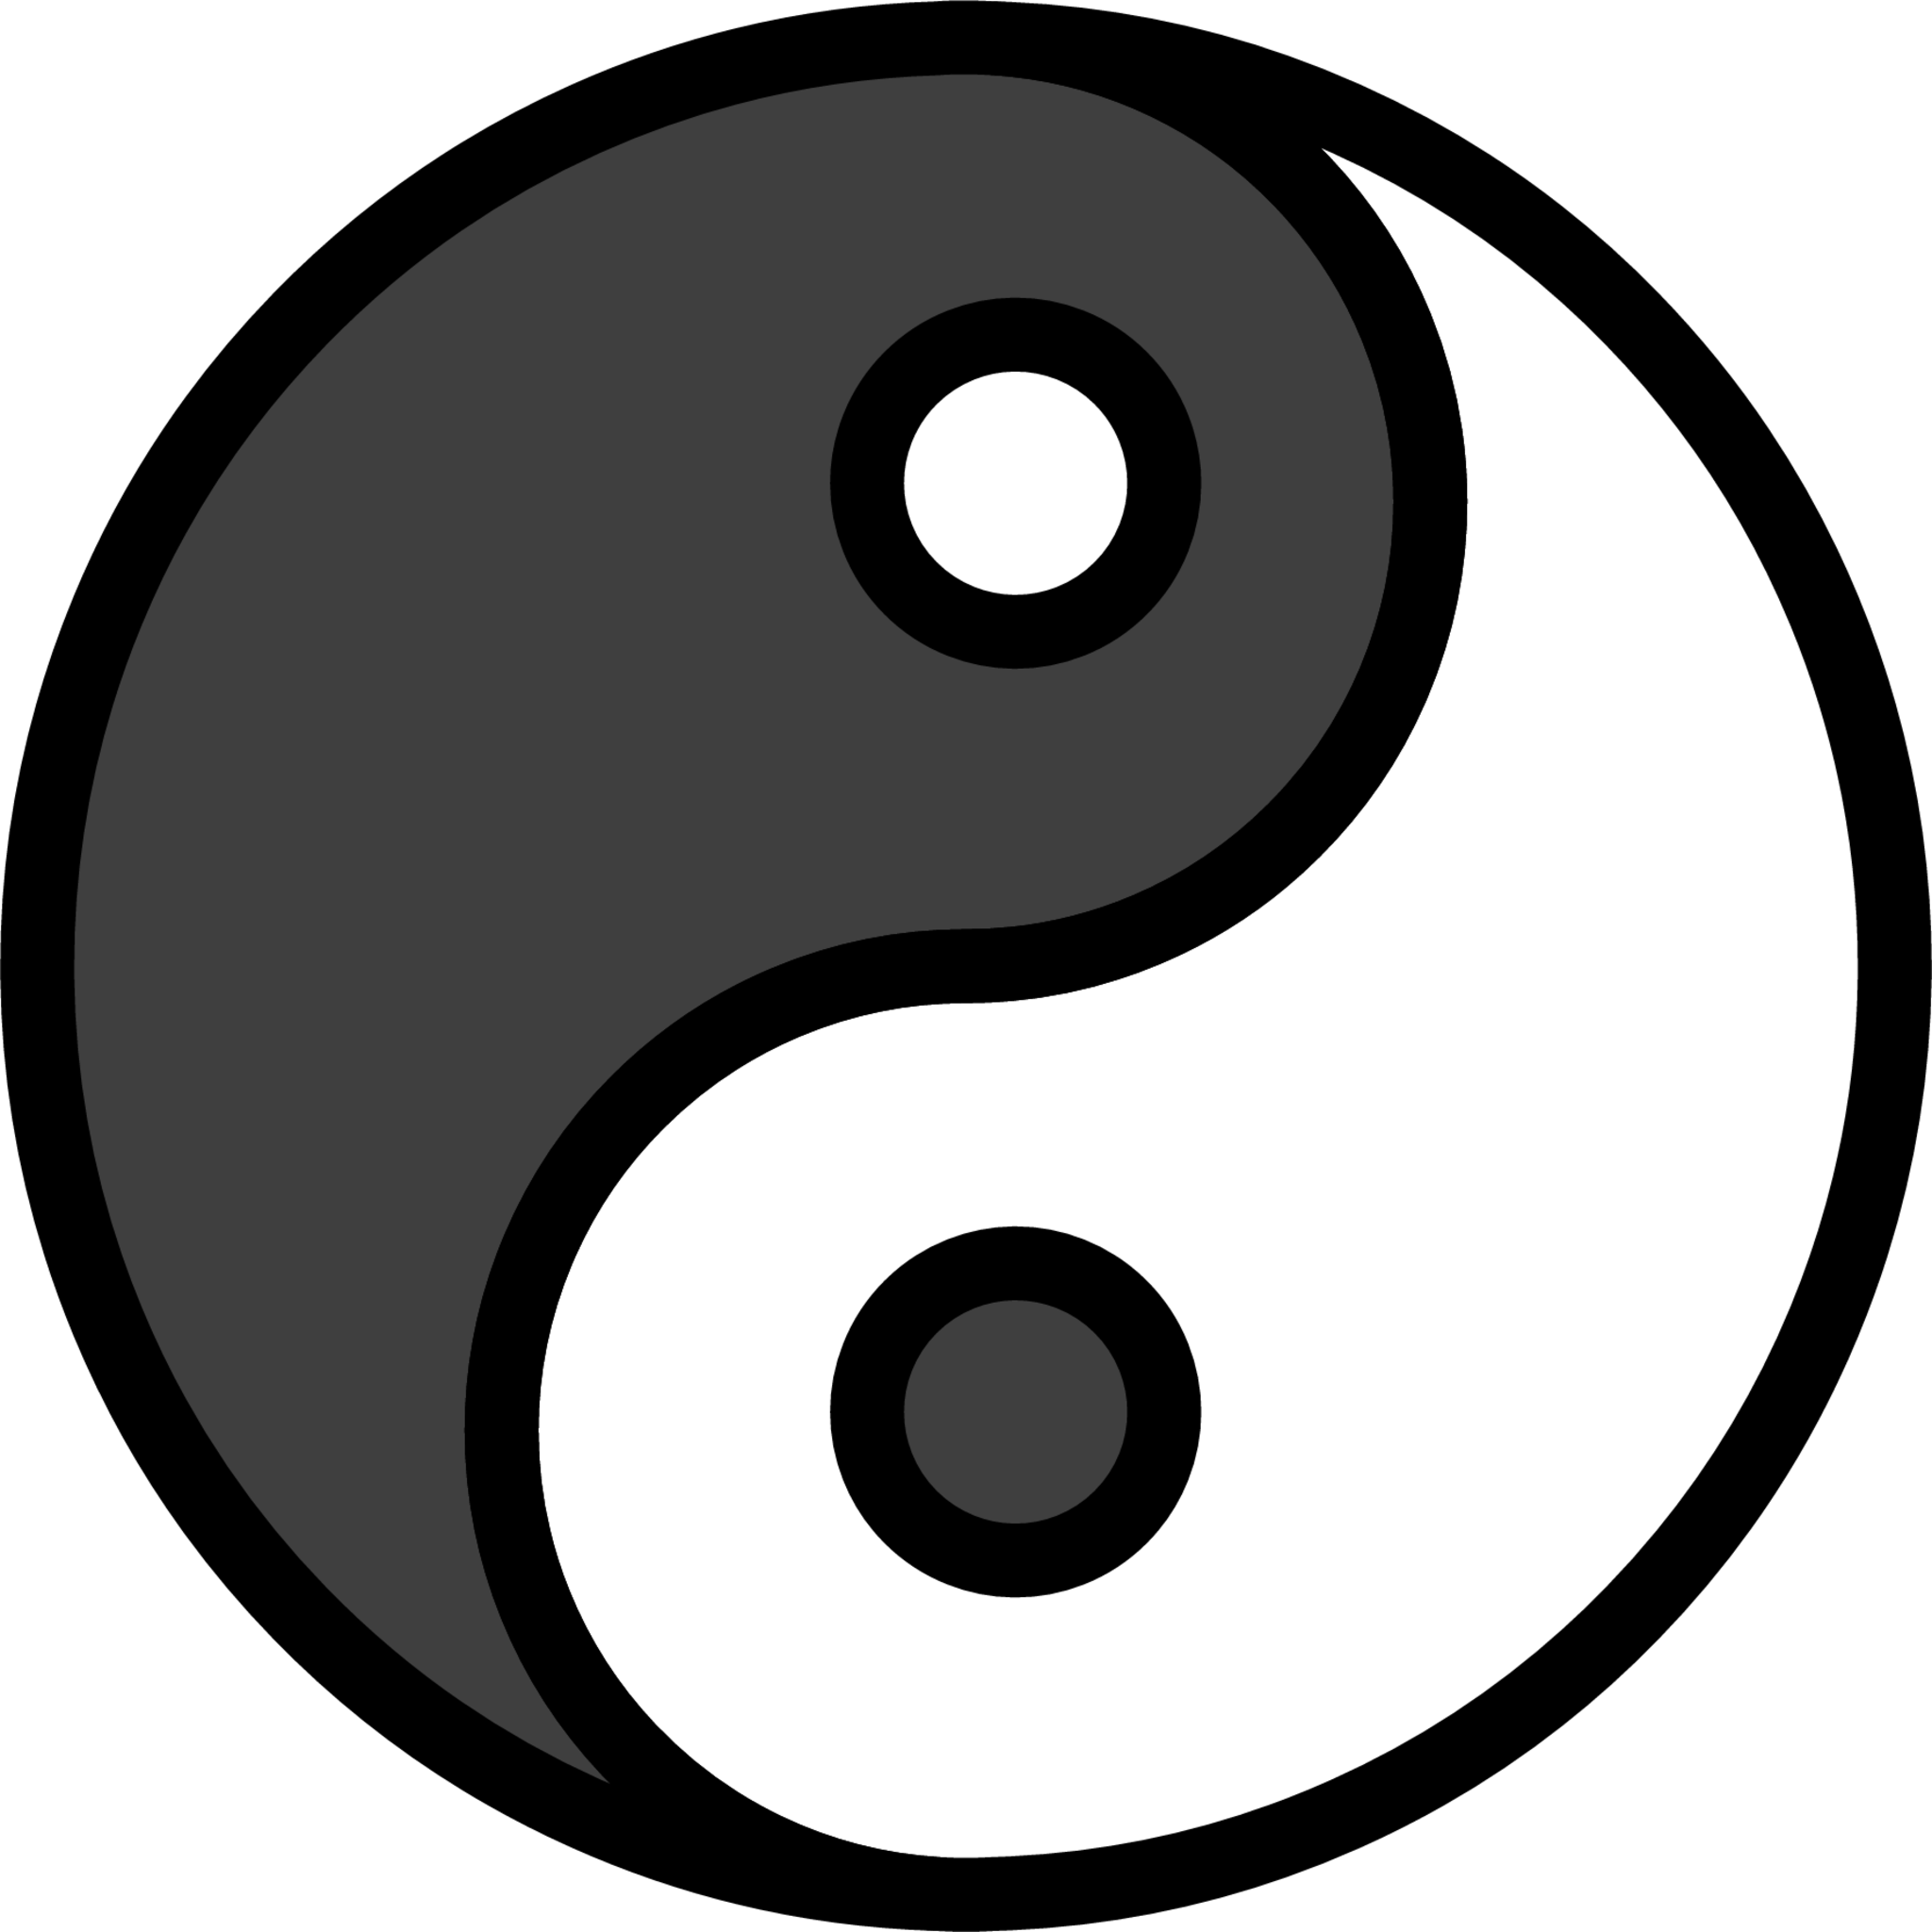 https://static-00.iconduck.com/assets.00/yin-yang-emoji-2048x2048-fjtrgmow.png